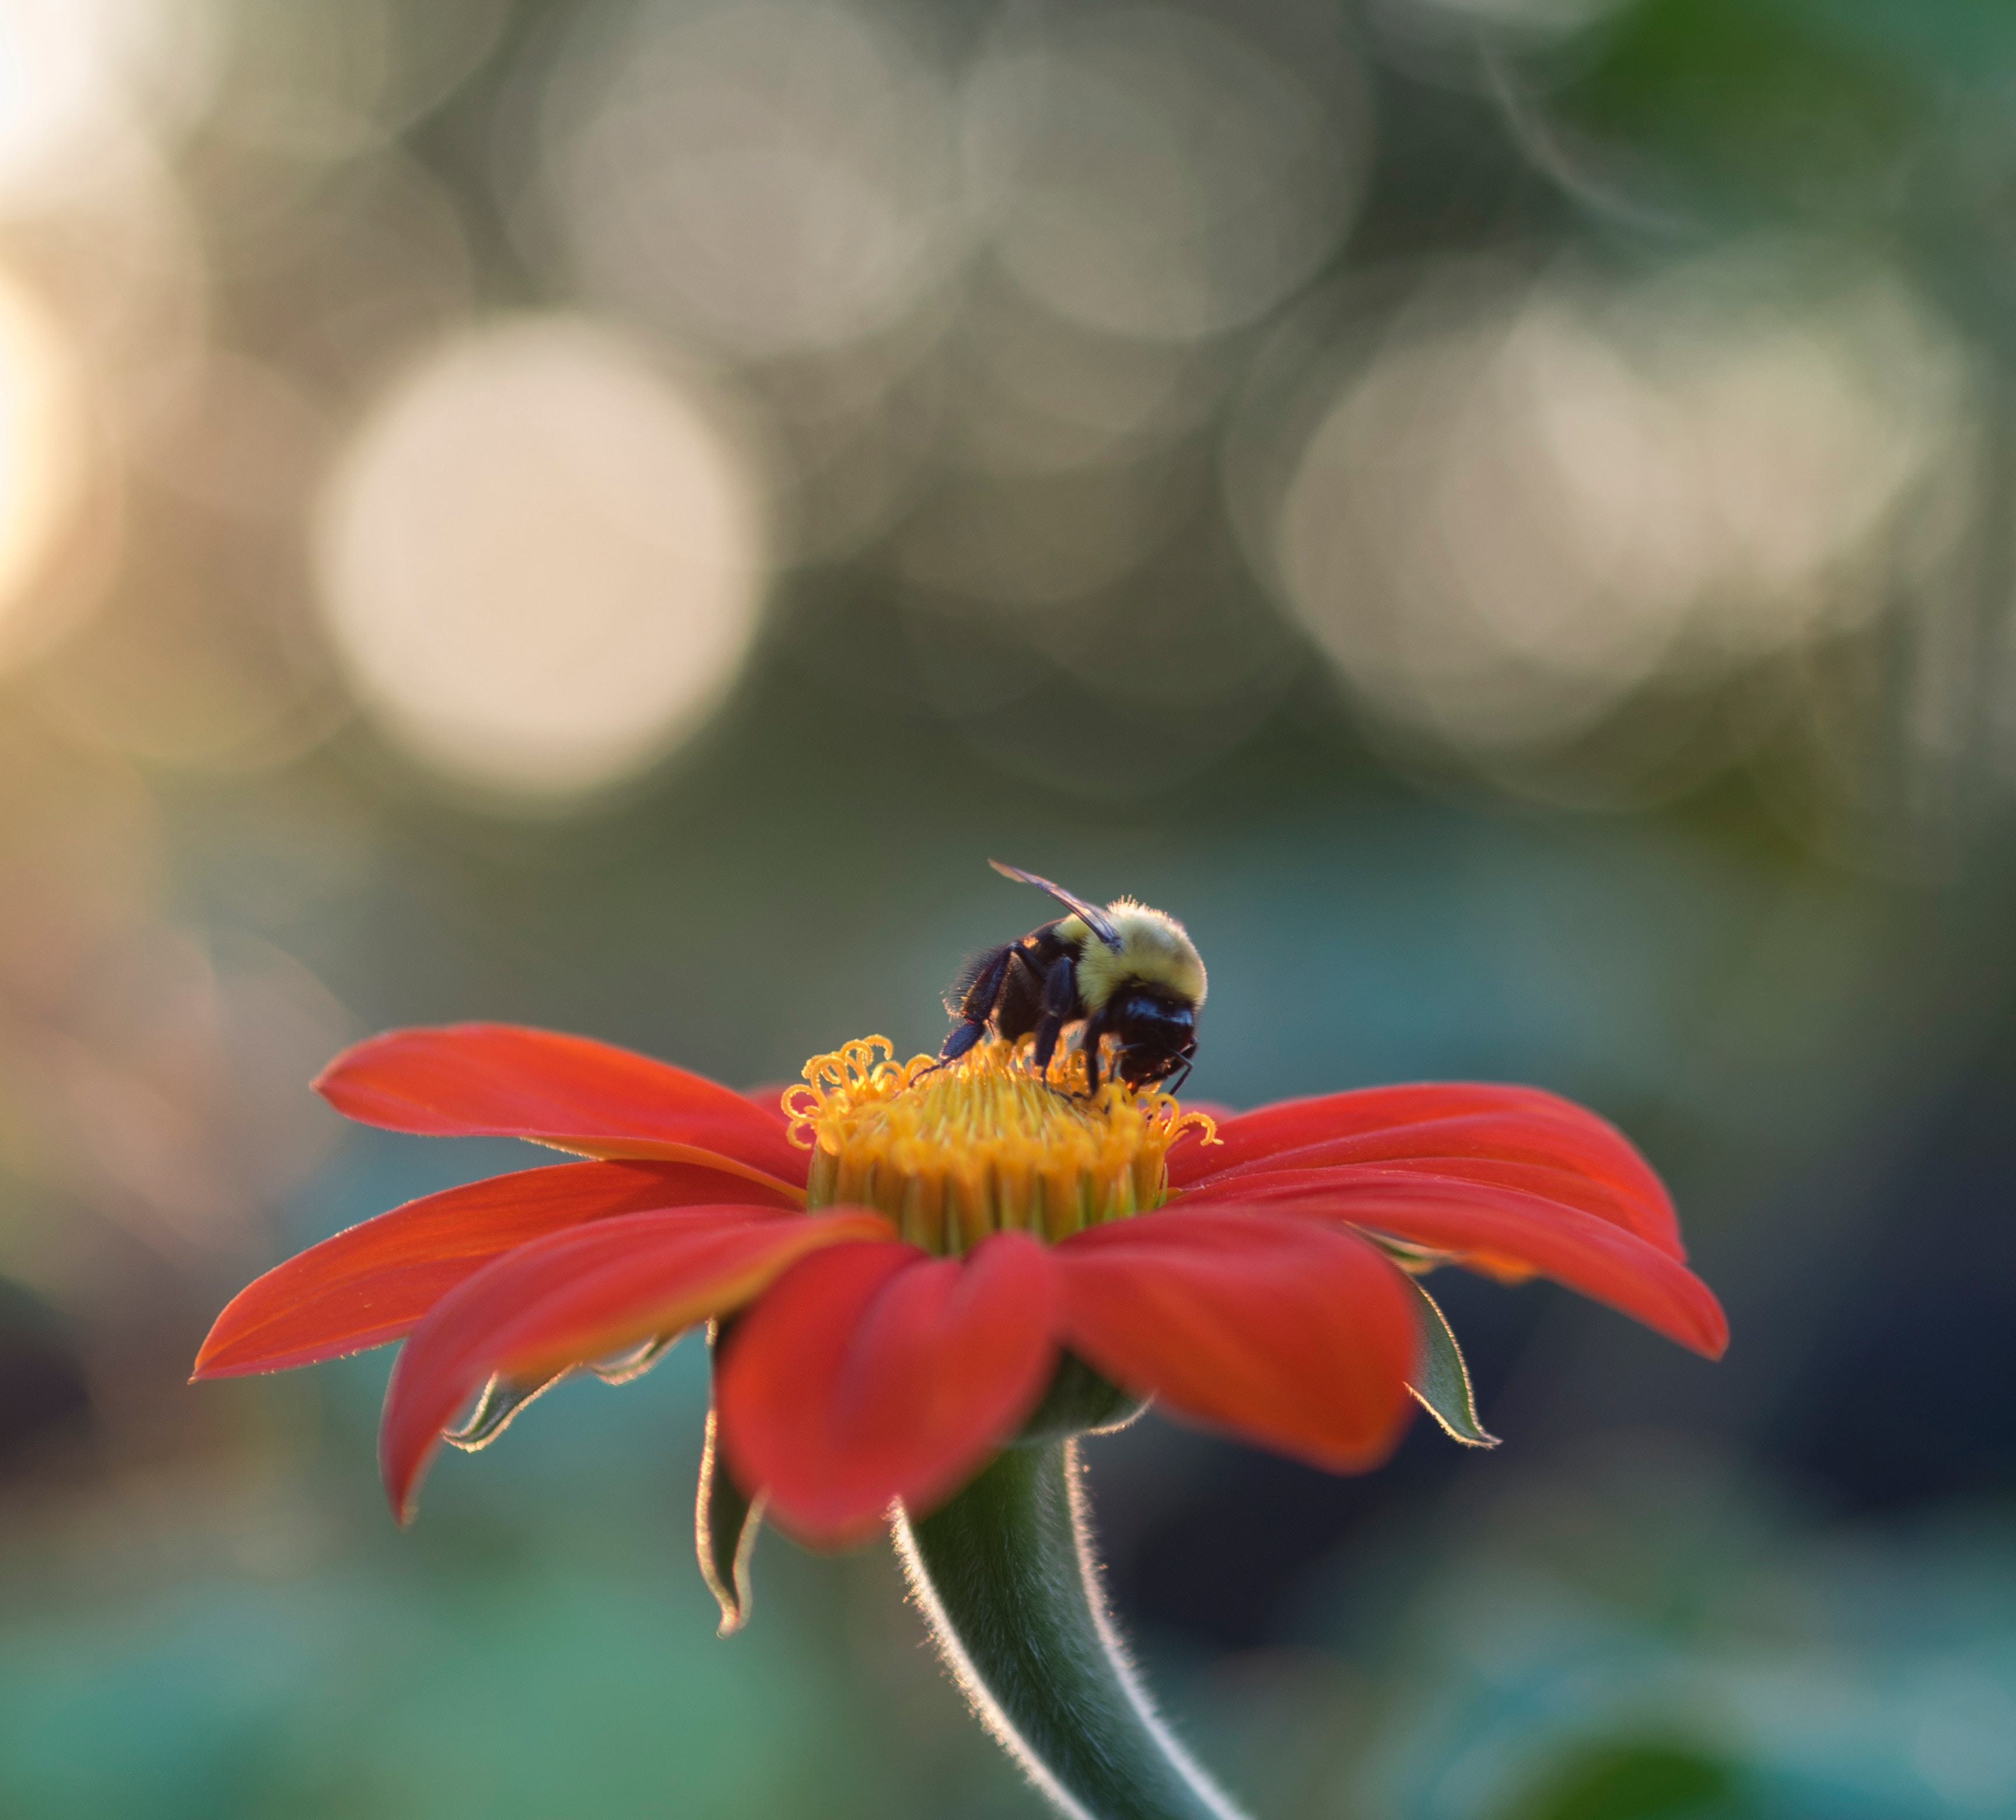 Bee, Photo by Aaron Burden on Unsplash